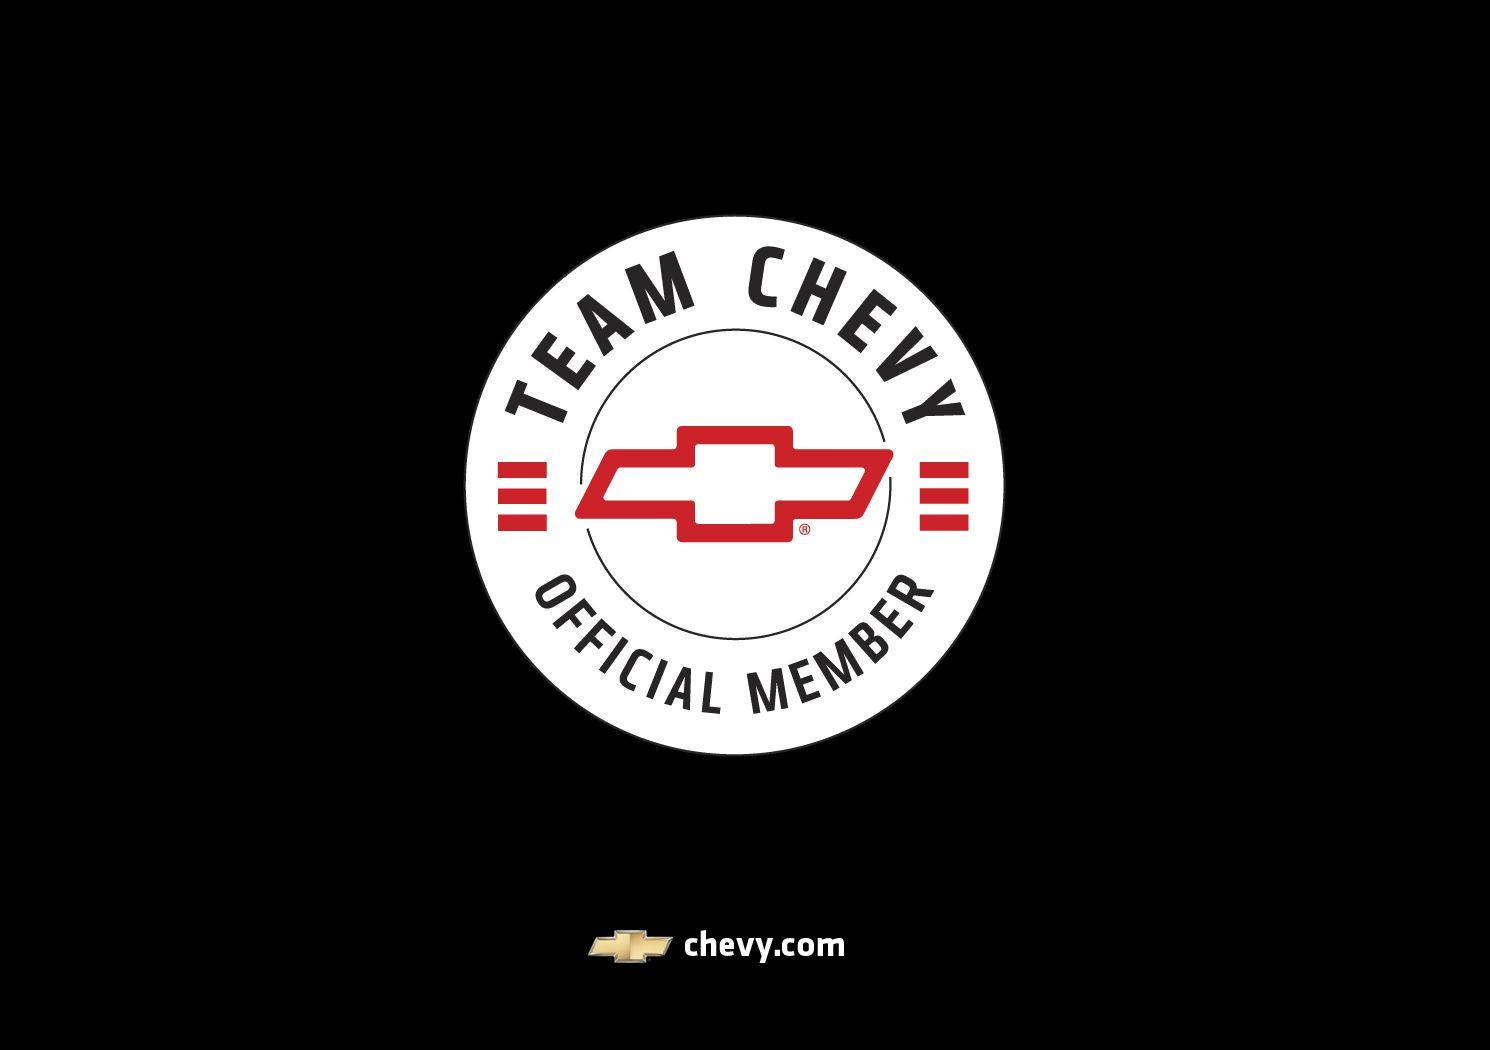 Team Chevy Wallpaper, Team Chevy Myspace Background, Team Chevy